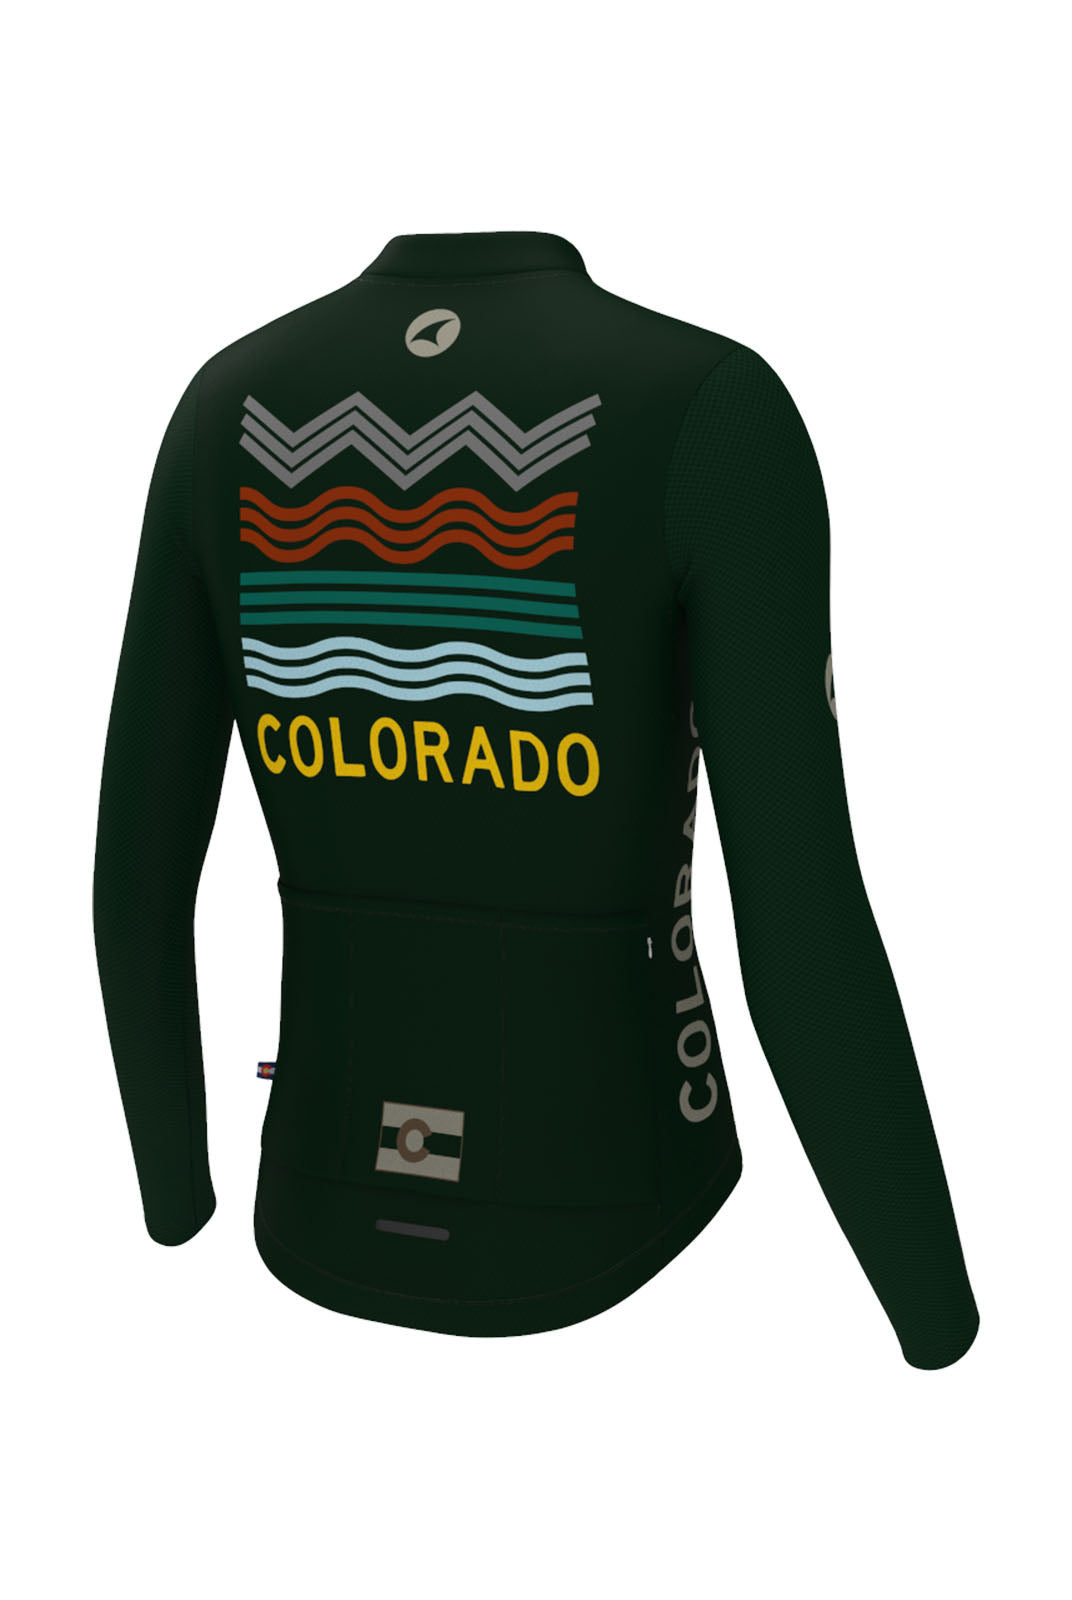 Men's Navy Blue Colorado Long Sleeve Cycling Jersey - Ascent Aero Back View